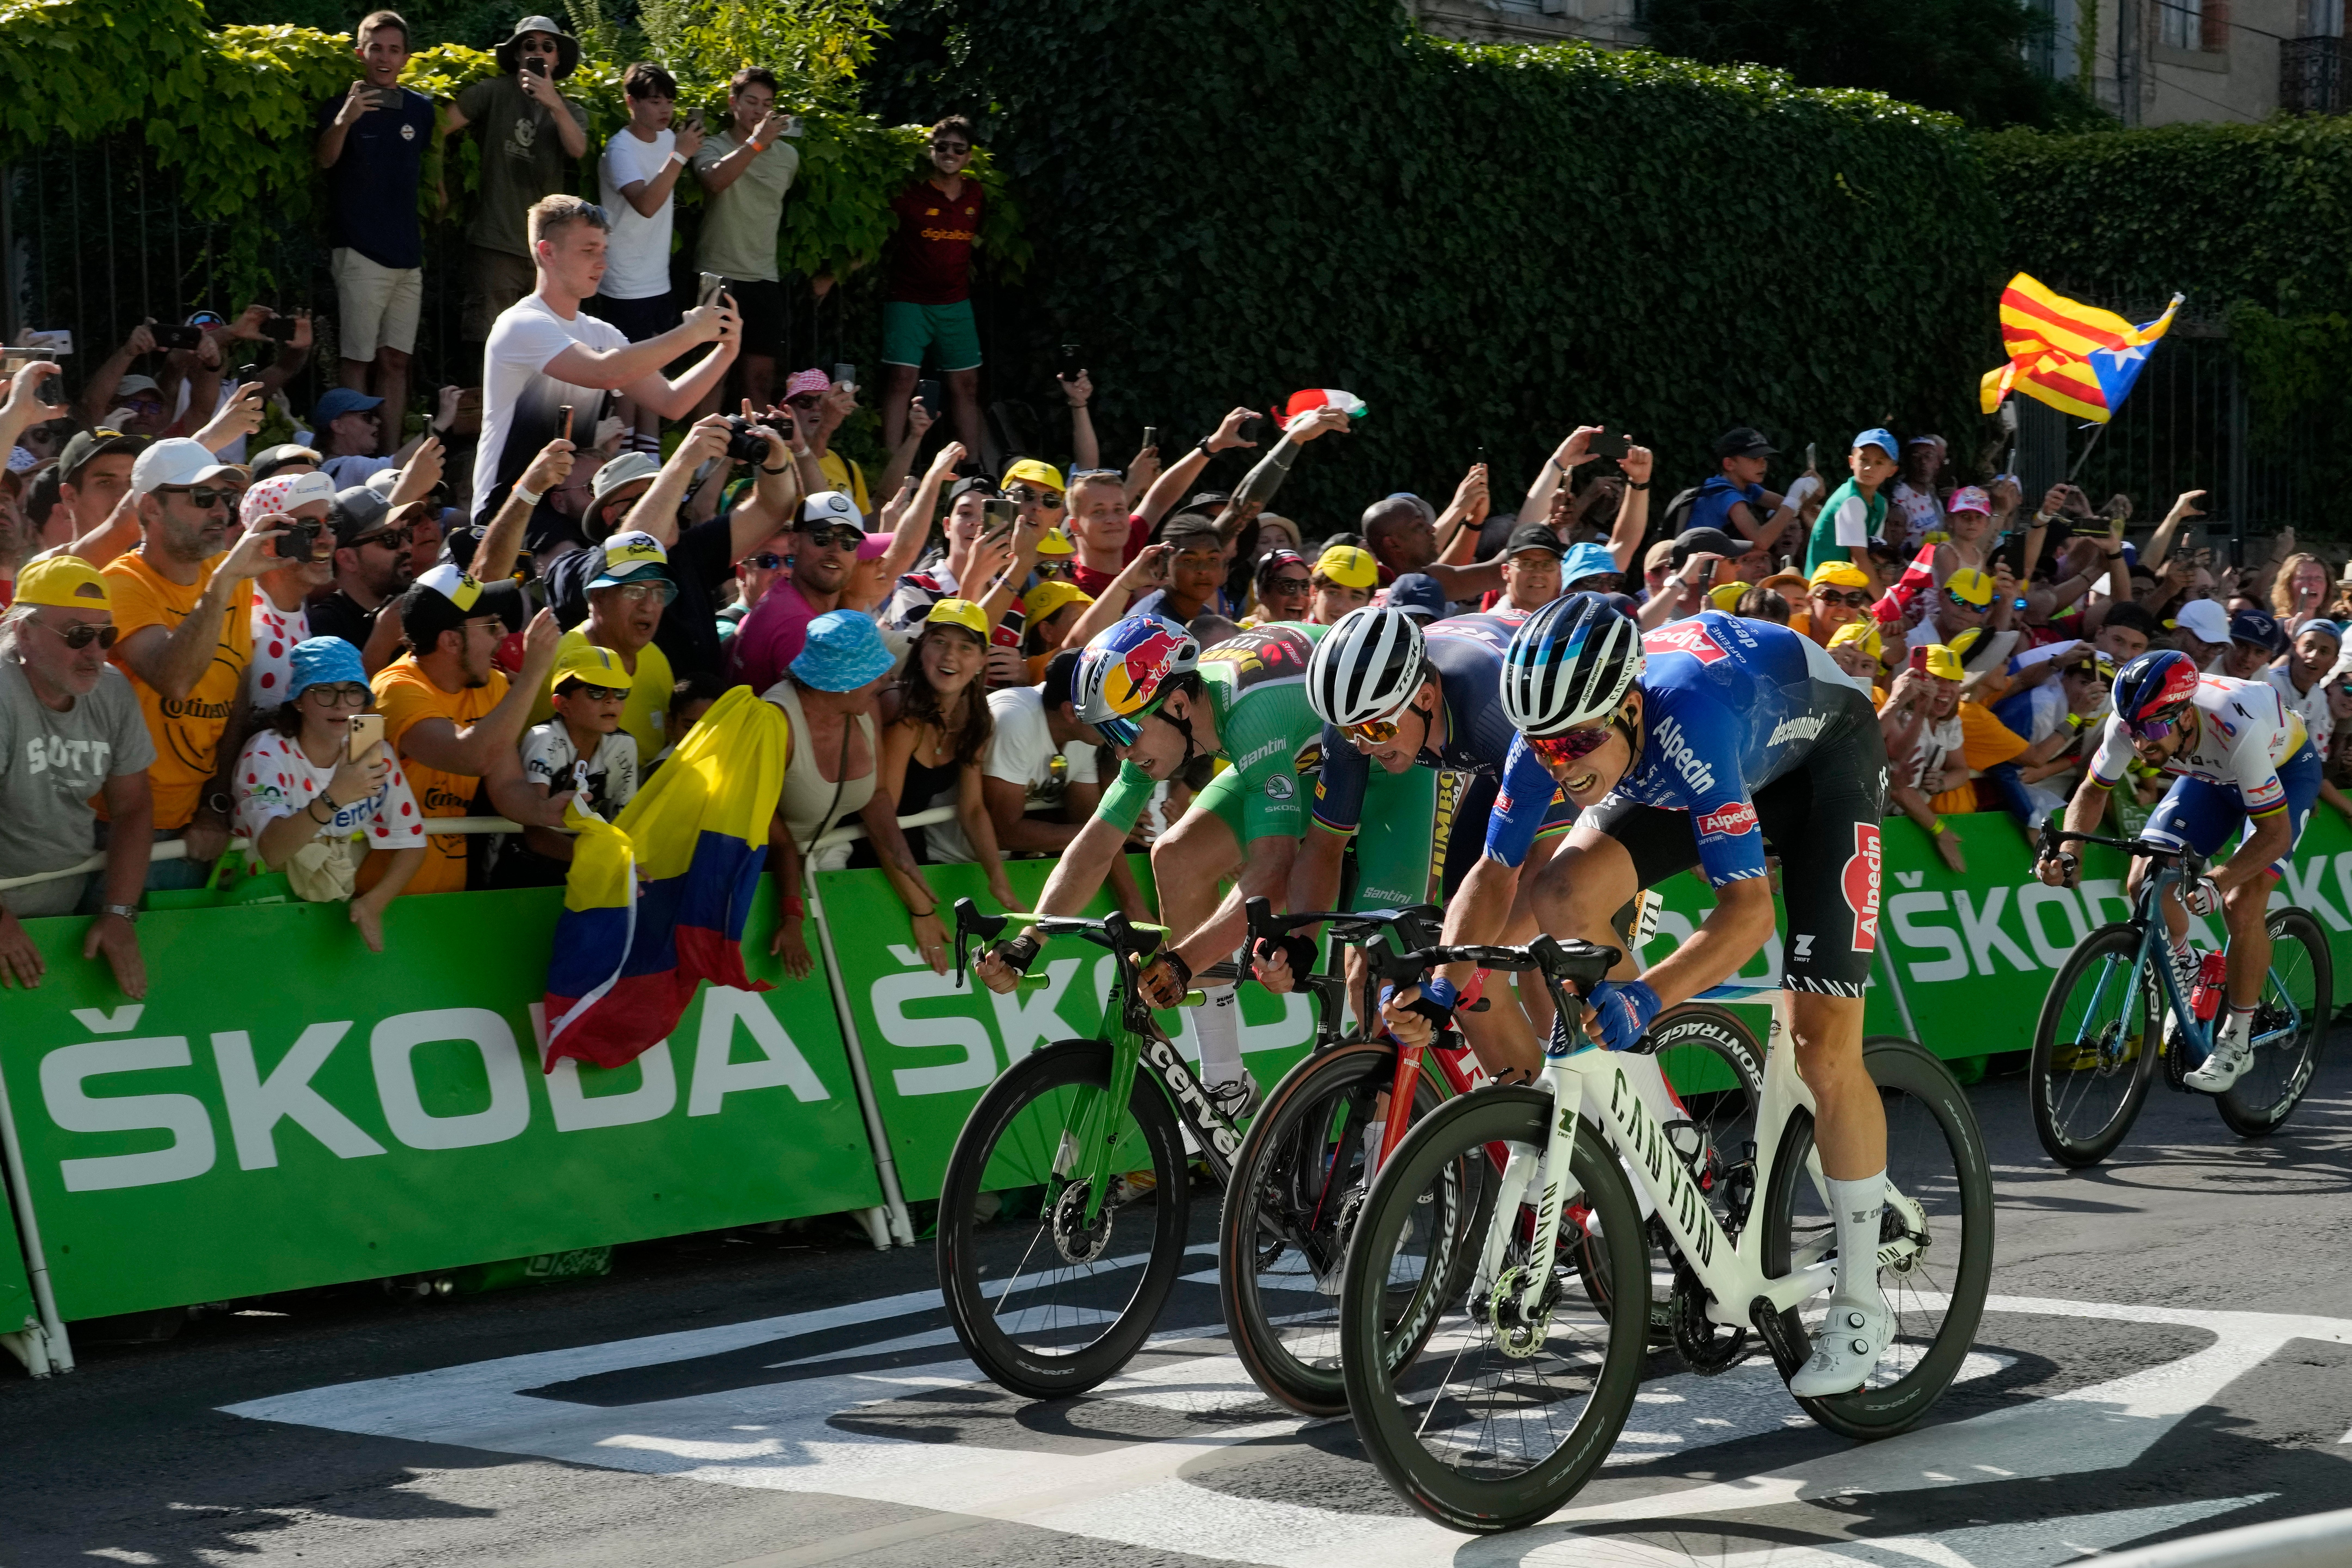 Belgium’s Jasper Philipsen, right, edges a sprint finish to win stage 15 of the Tour de France in Carcassonne (Thibault Camus/AP)